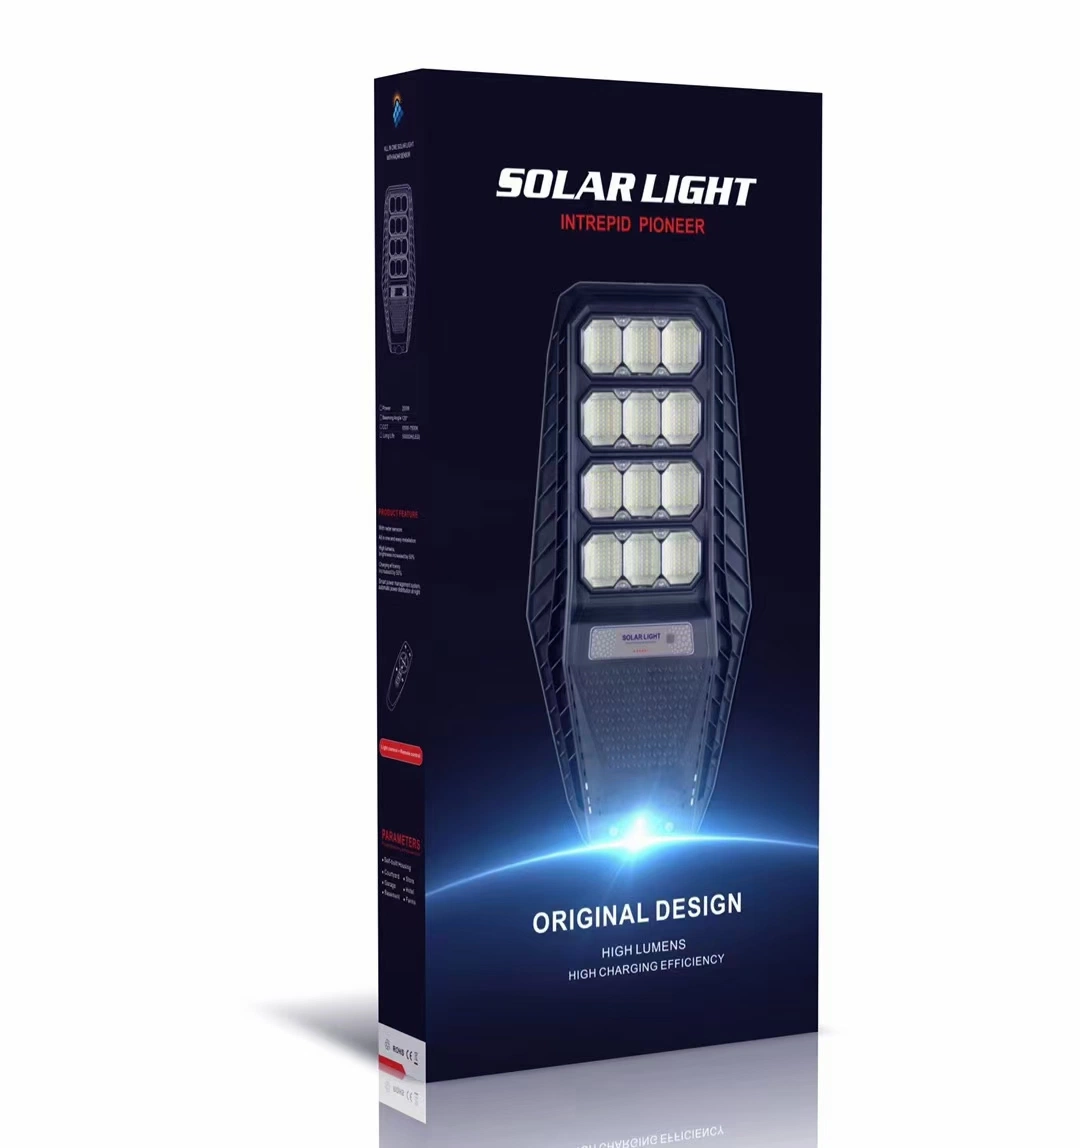 Bester Preis All in One 200W LED Solar Street Light MJ-Lh8200 mit Radarsensor